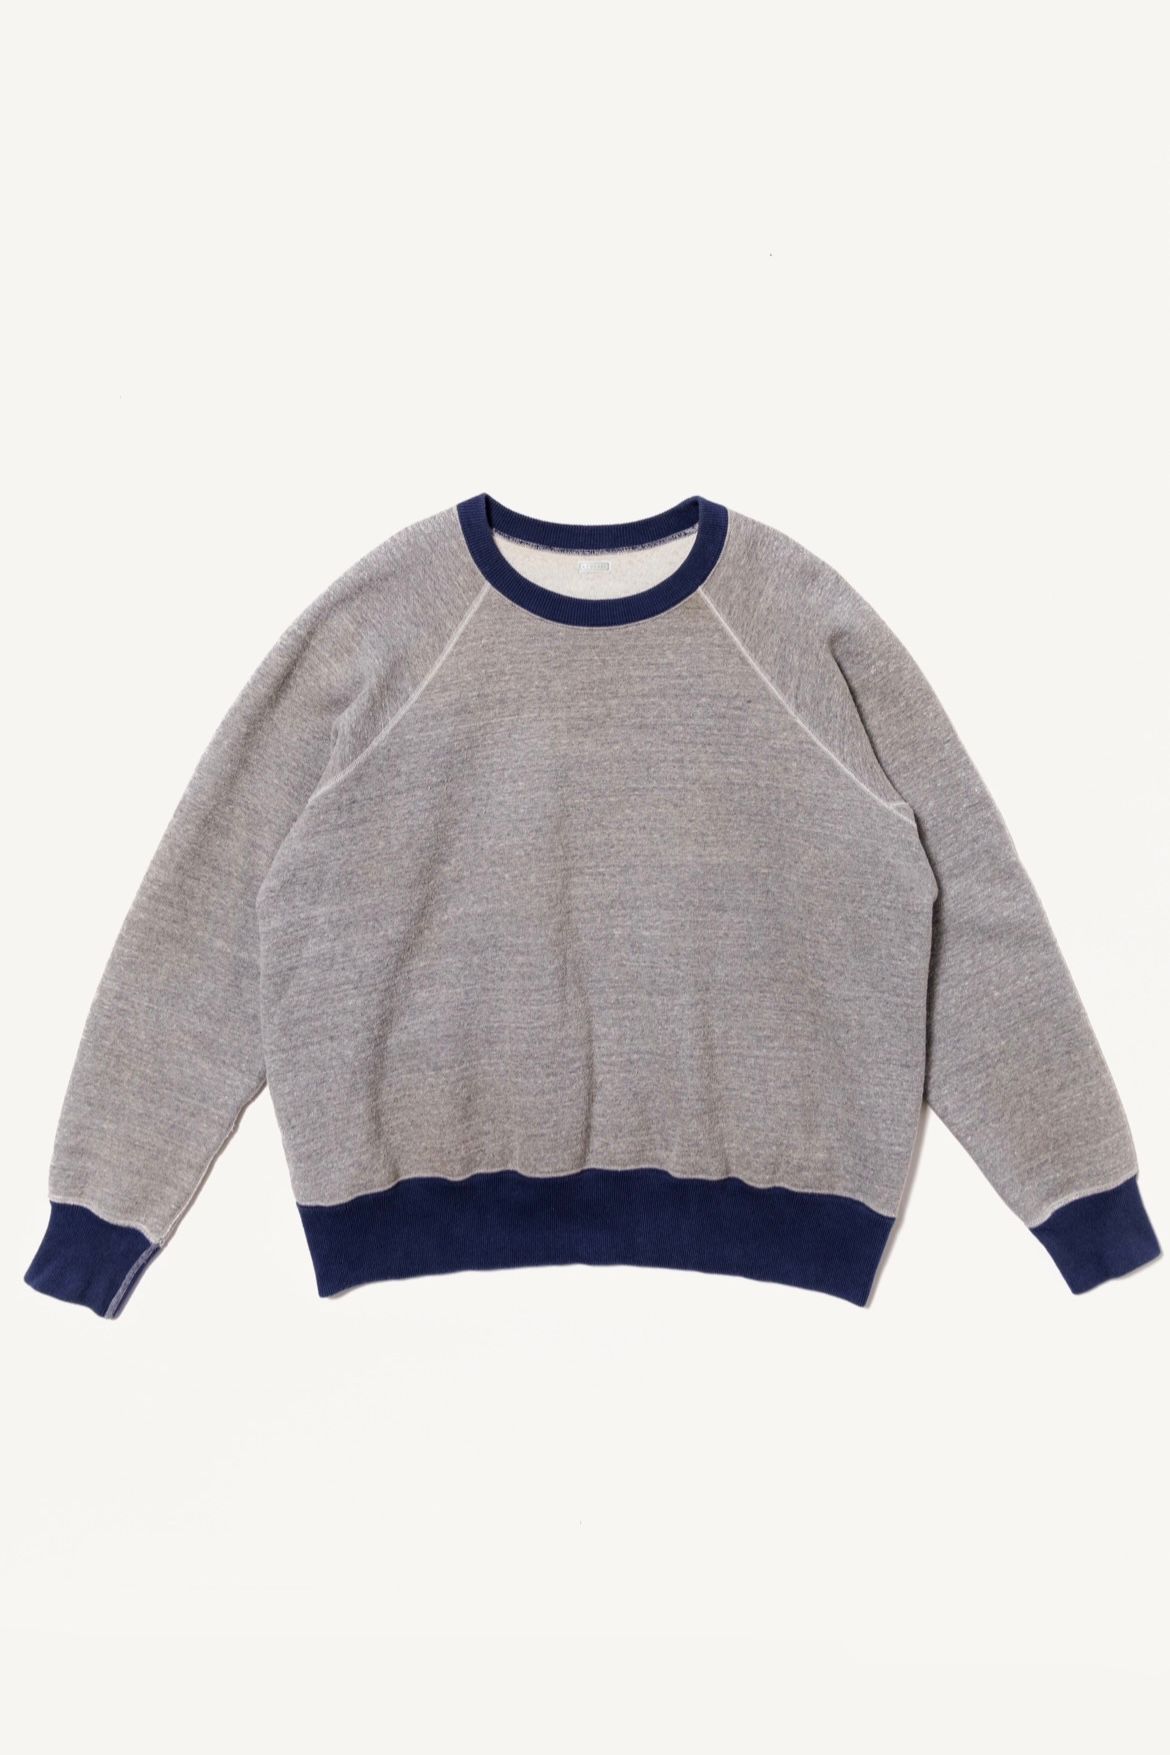 A.PRESSE - Vintage Sweatshirt -gray- 23aw | asterisk